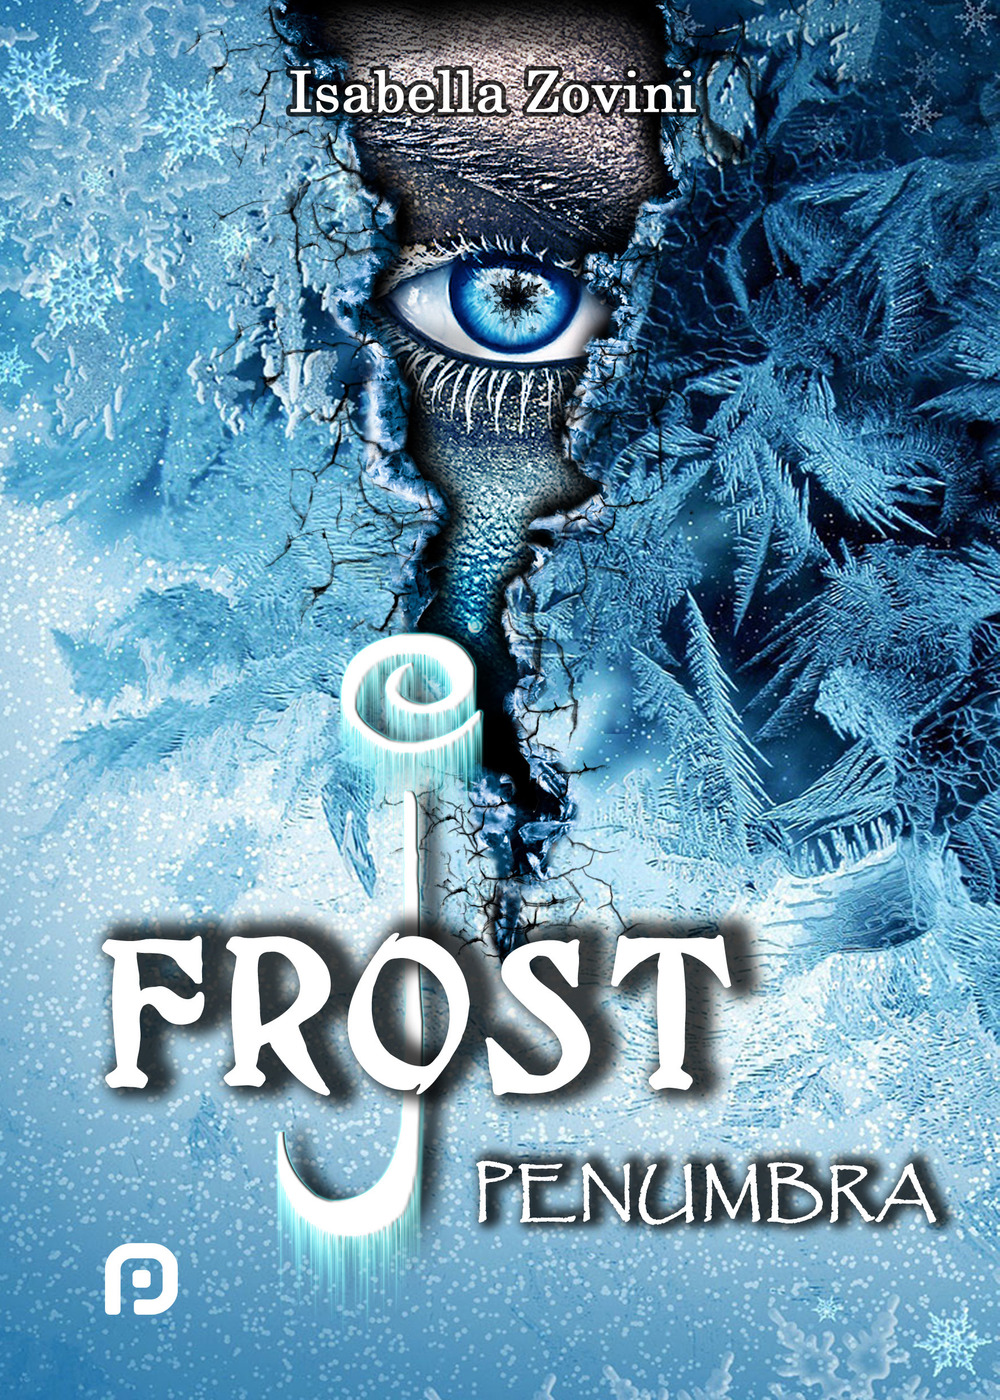 Penumbra. J. Frost